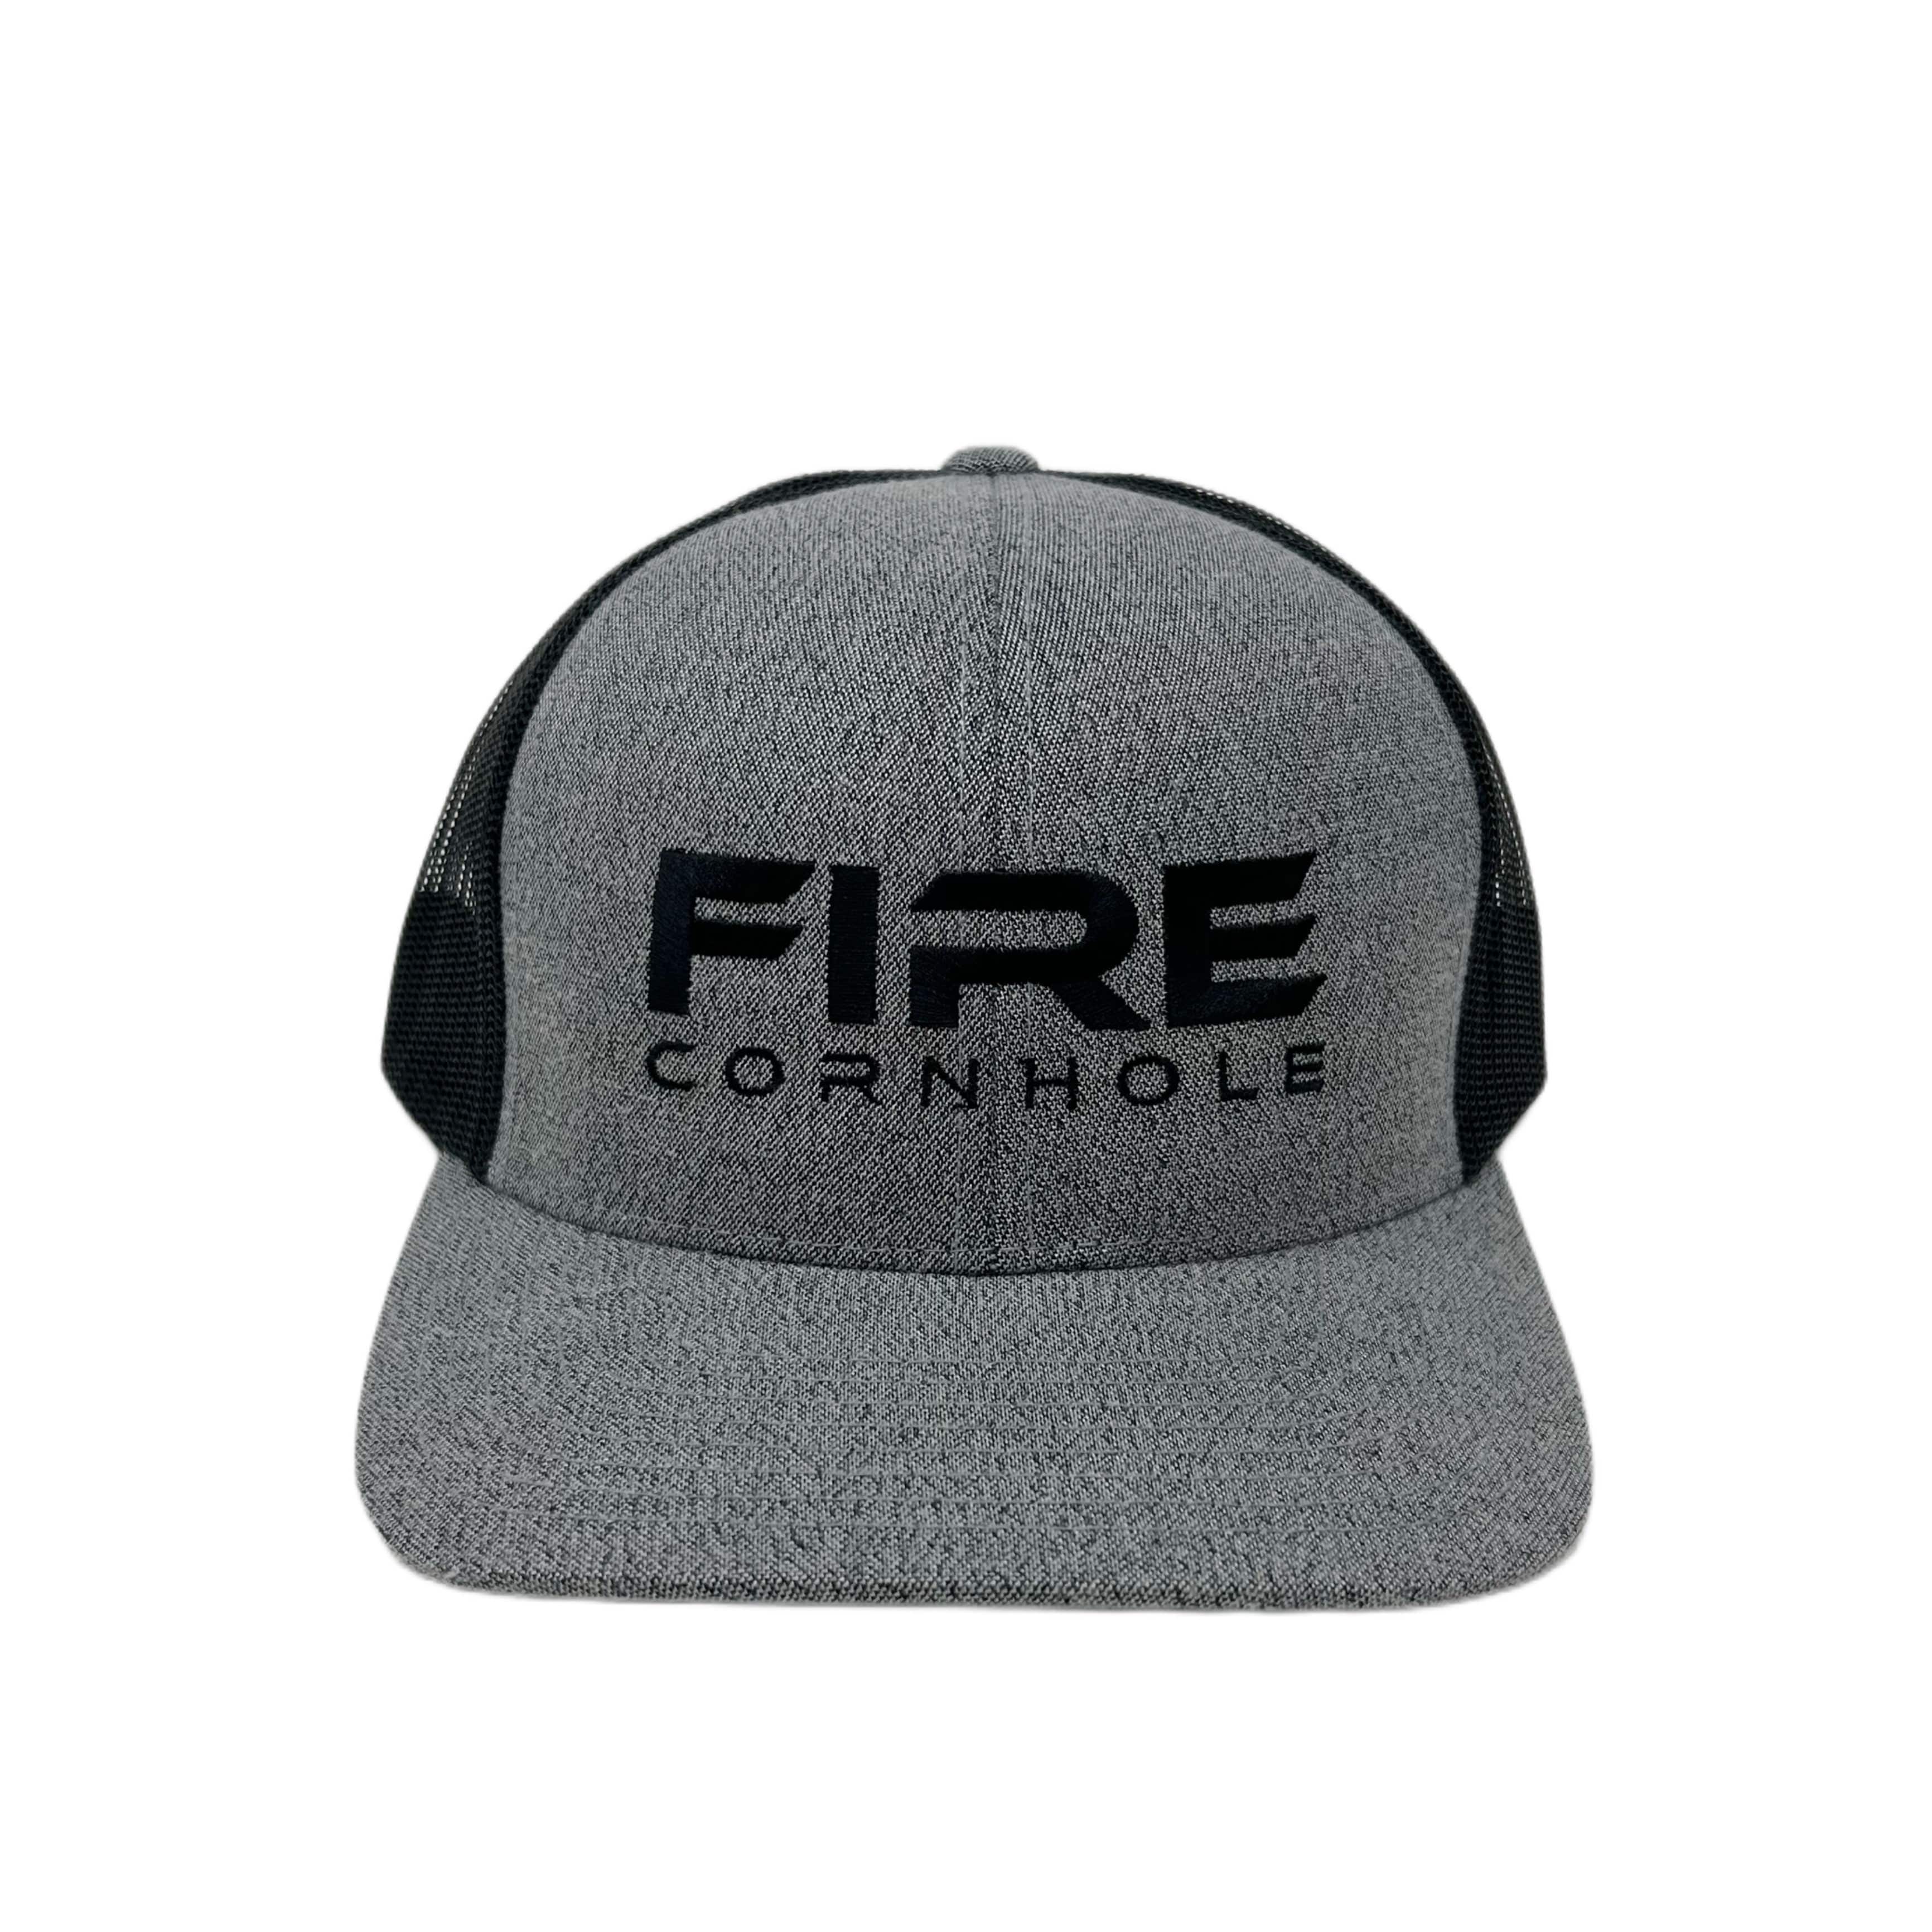 Fire Cornhole Grey Heather/Black Back Hat - Black Logo